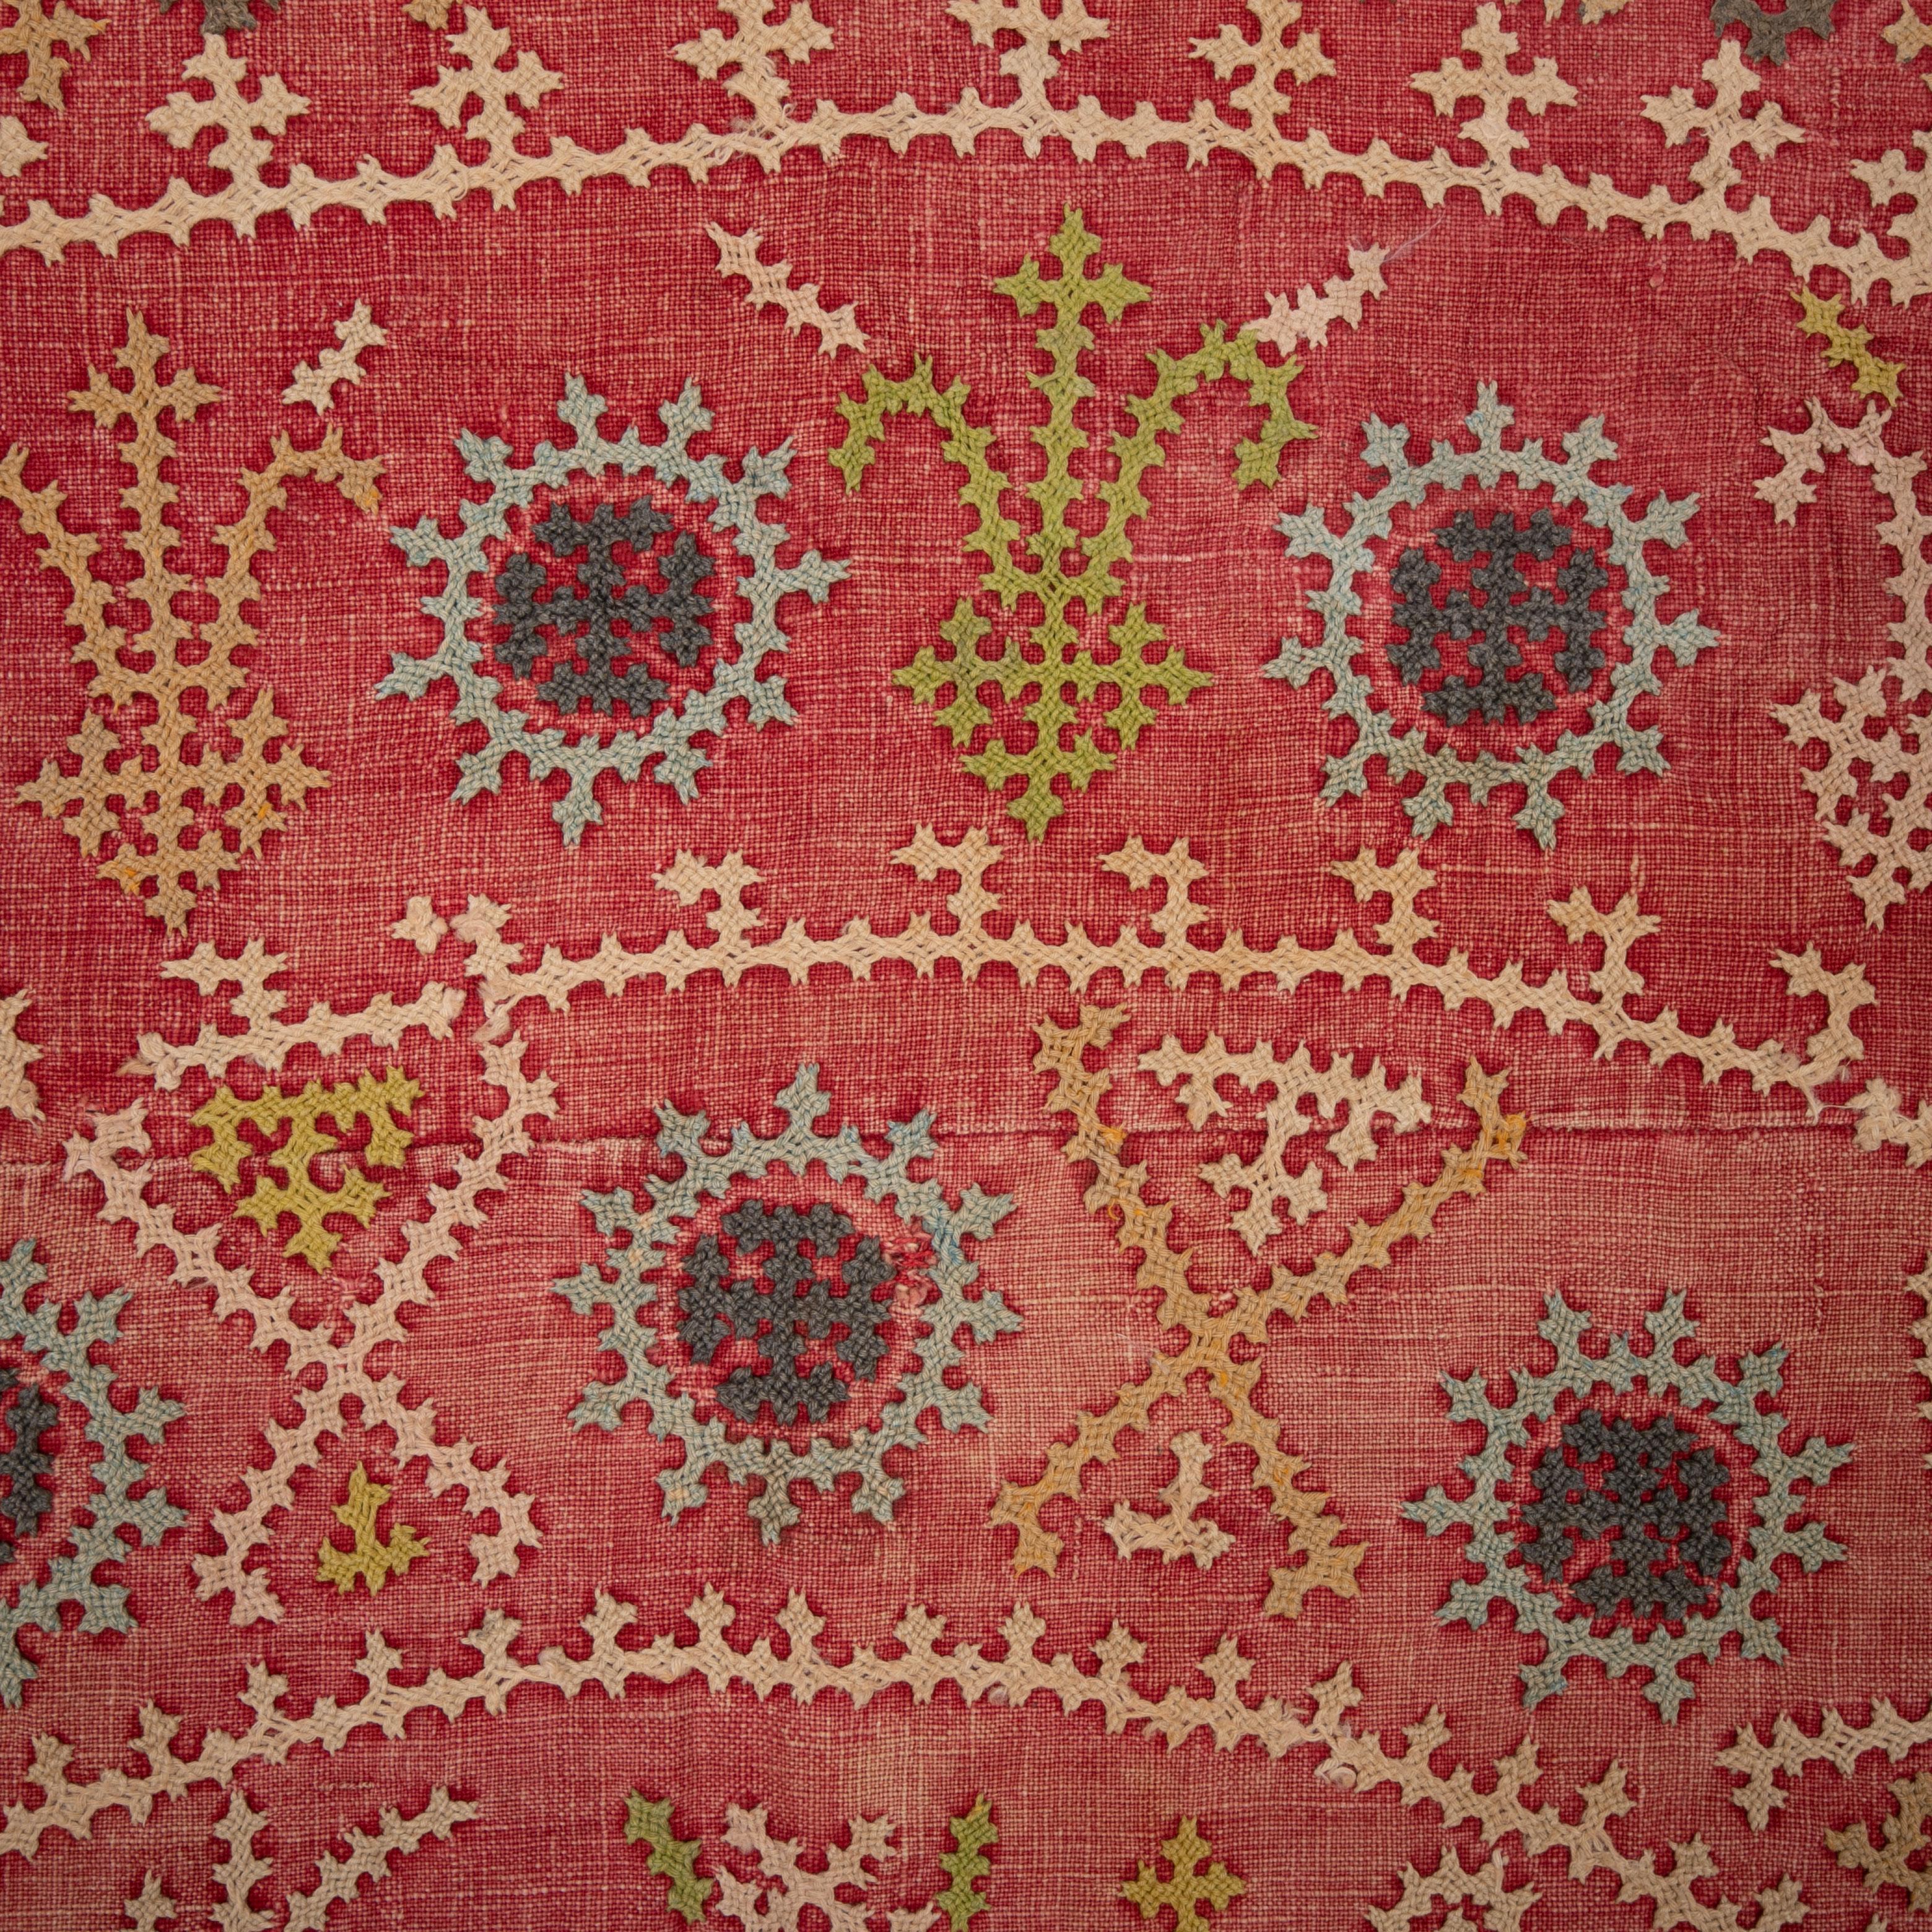 Cotton Armenian Marash Embroidery, Late 19th Century